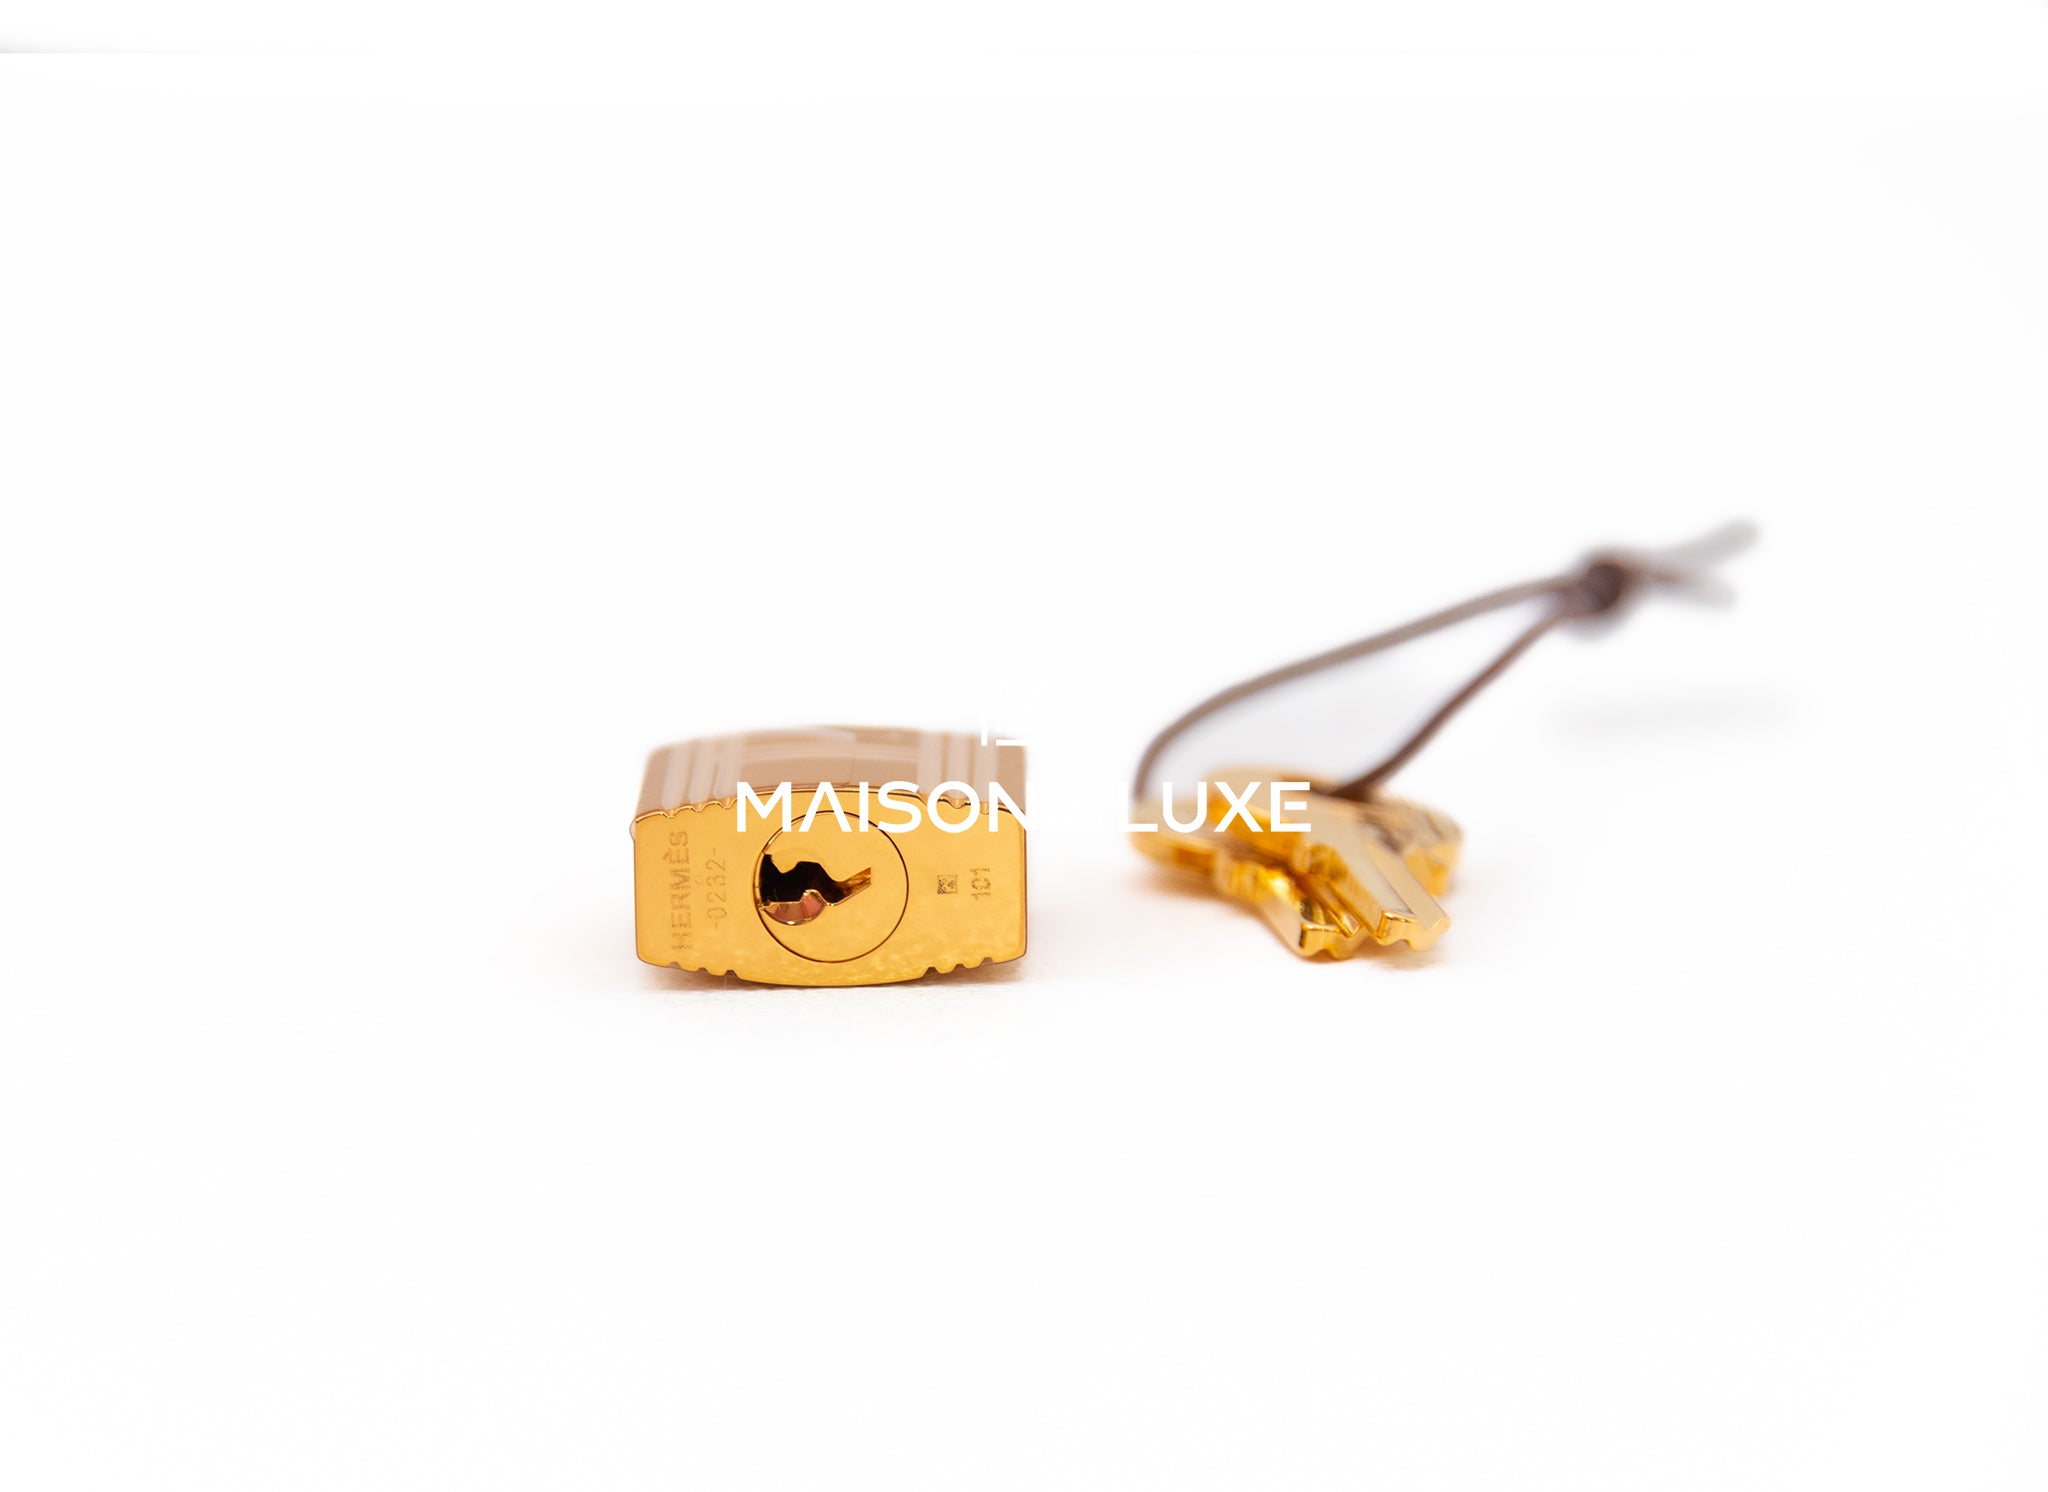 Hermes Picotin Lock 18 PM Gris Meyer Gold Hardware Bag